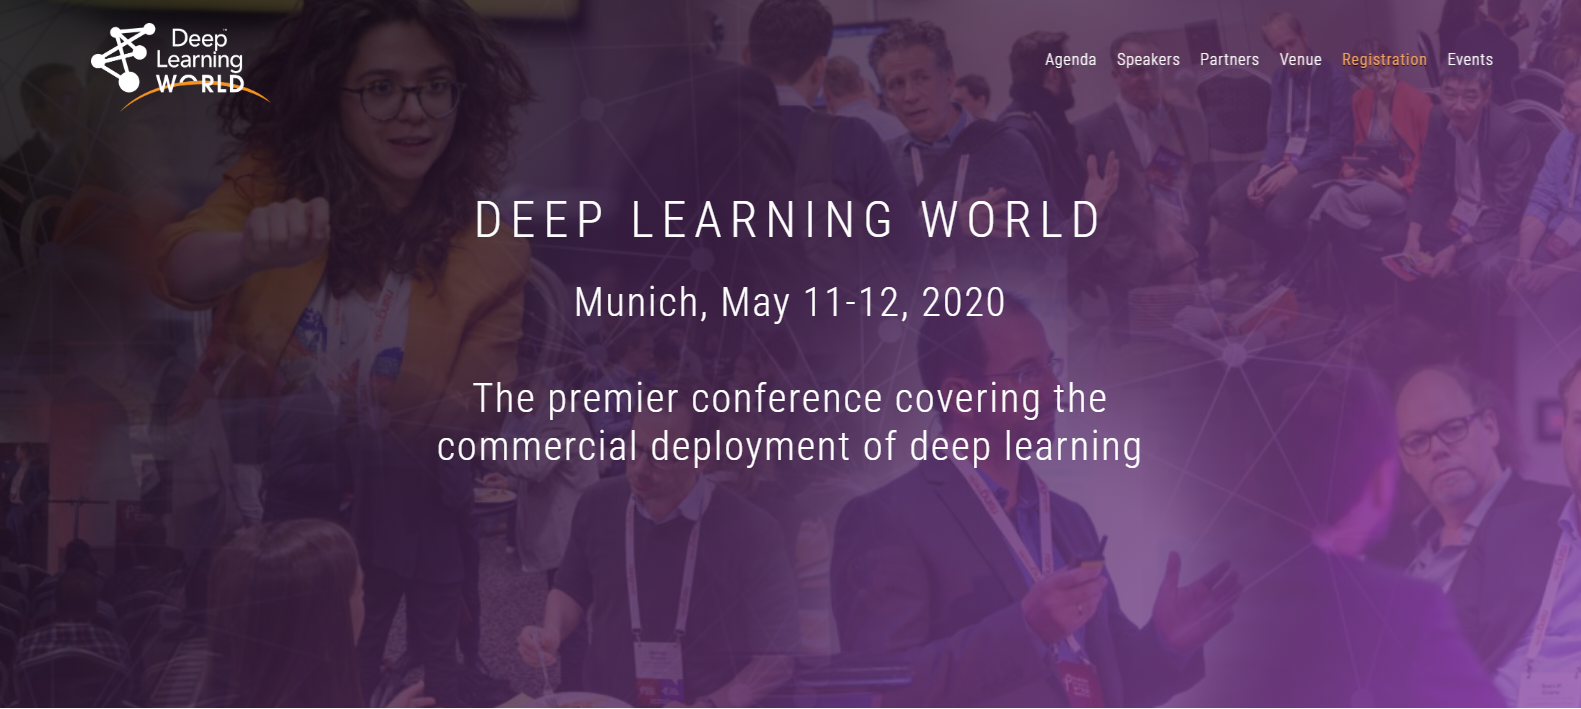 deep learning world